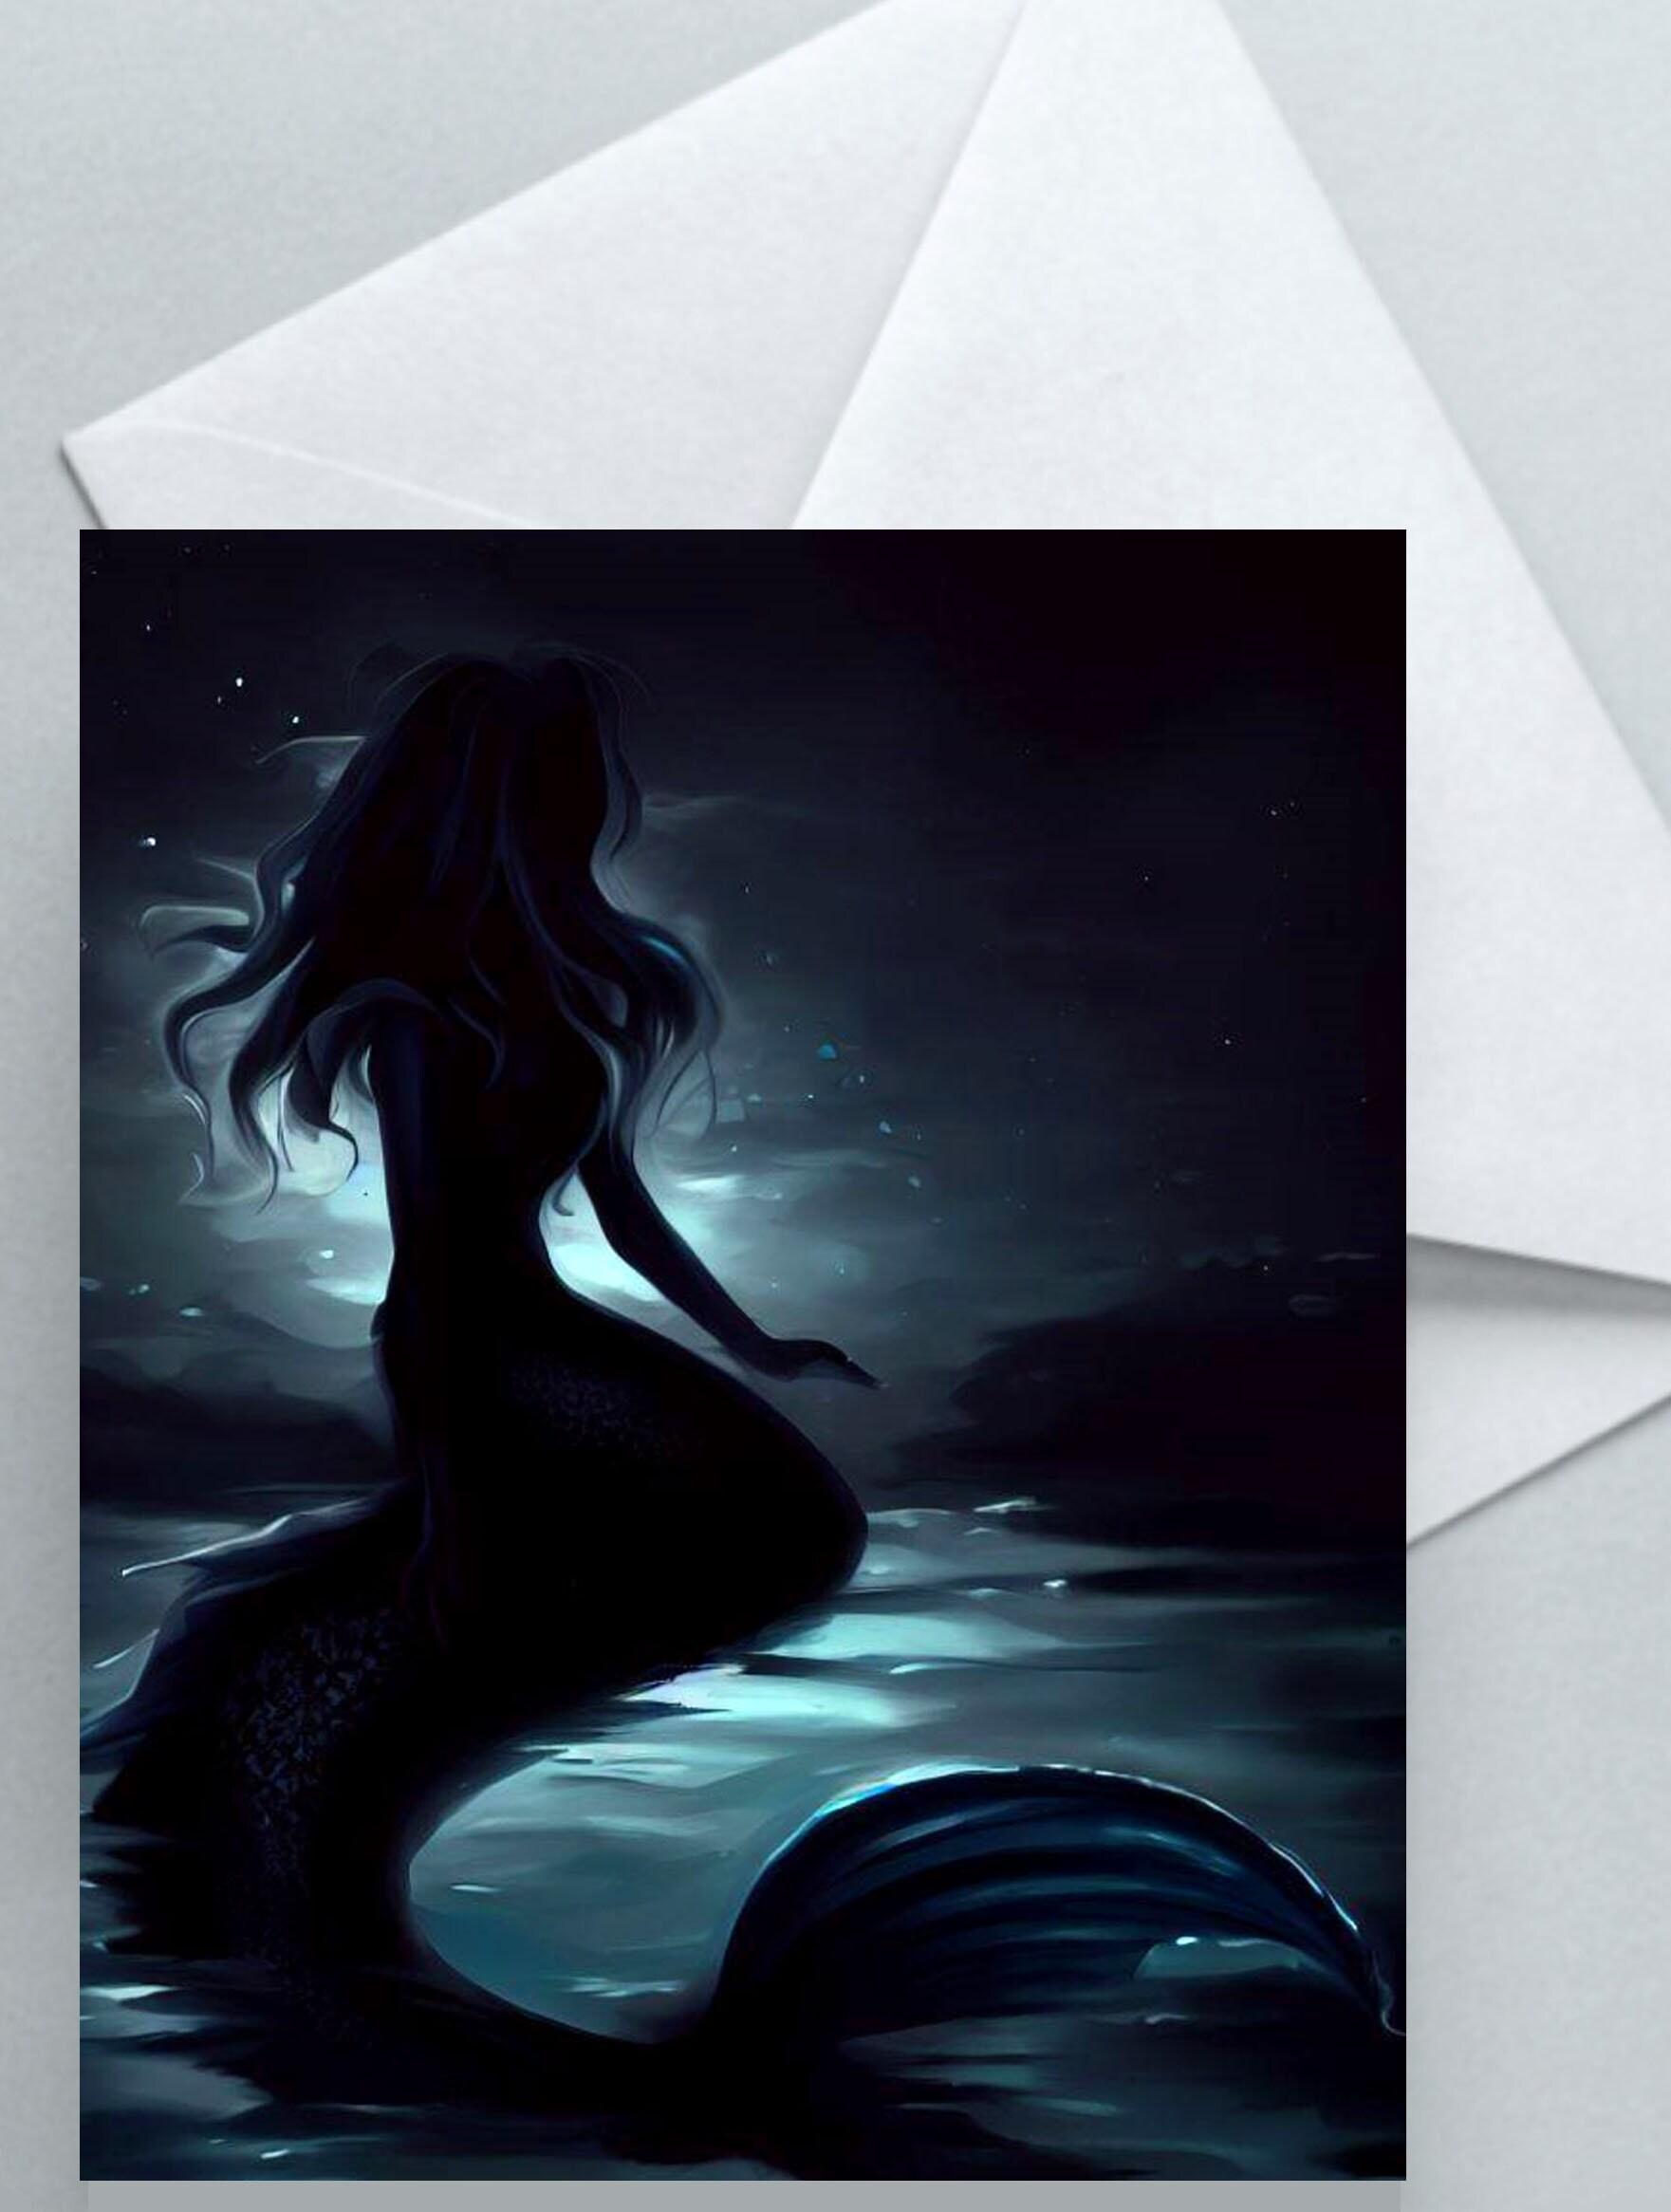 Mermaid Greeting Cards, Set of 5 Designs, Bulk Pack of Cards